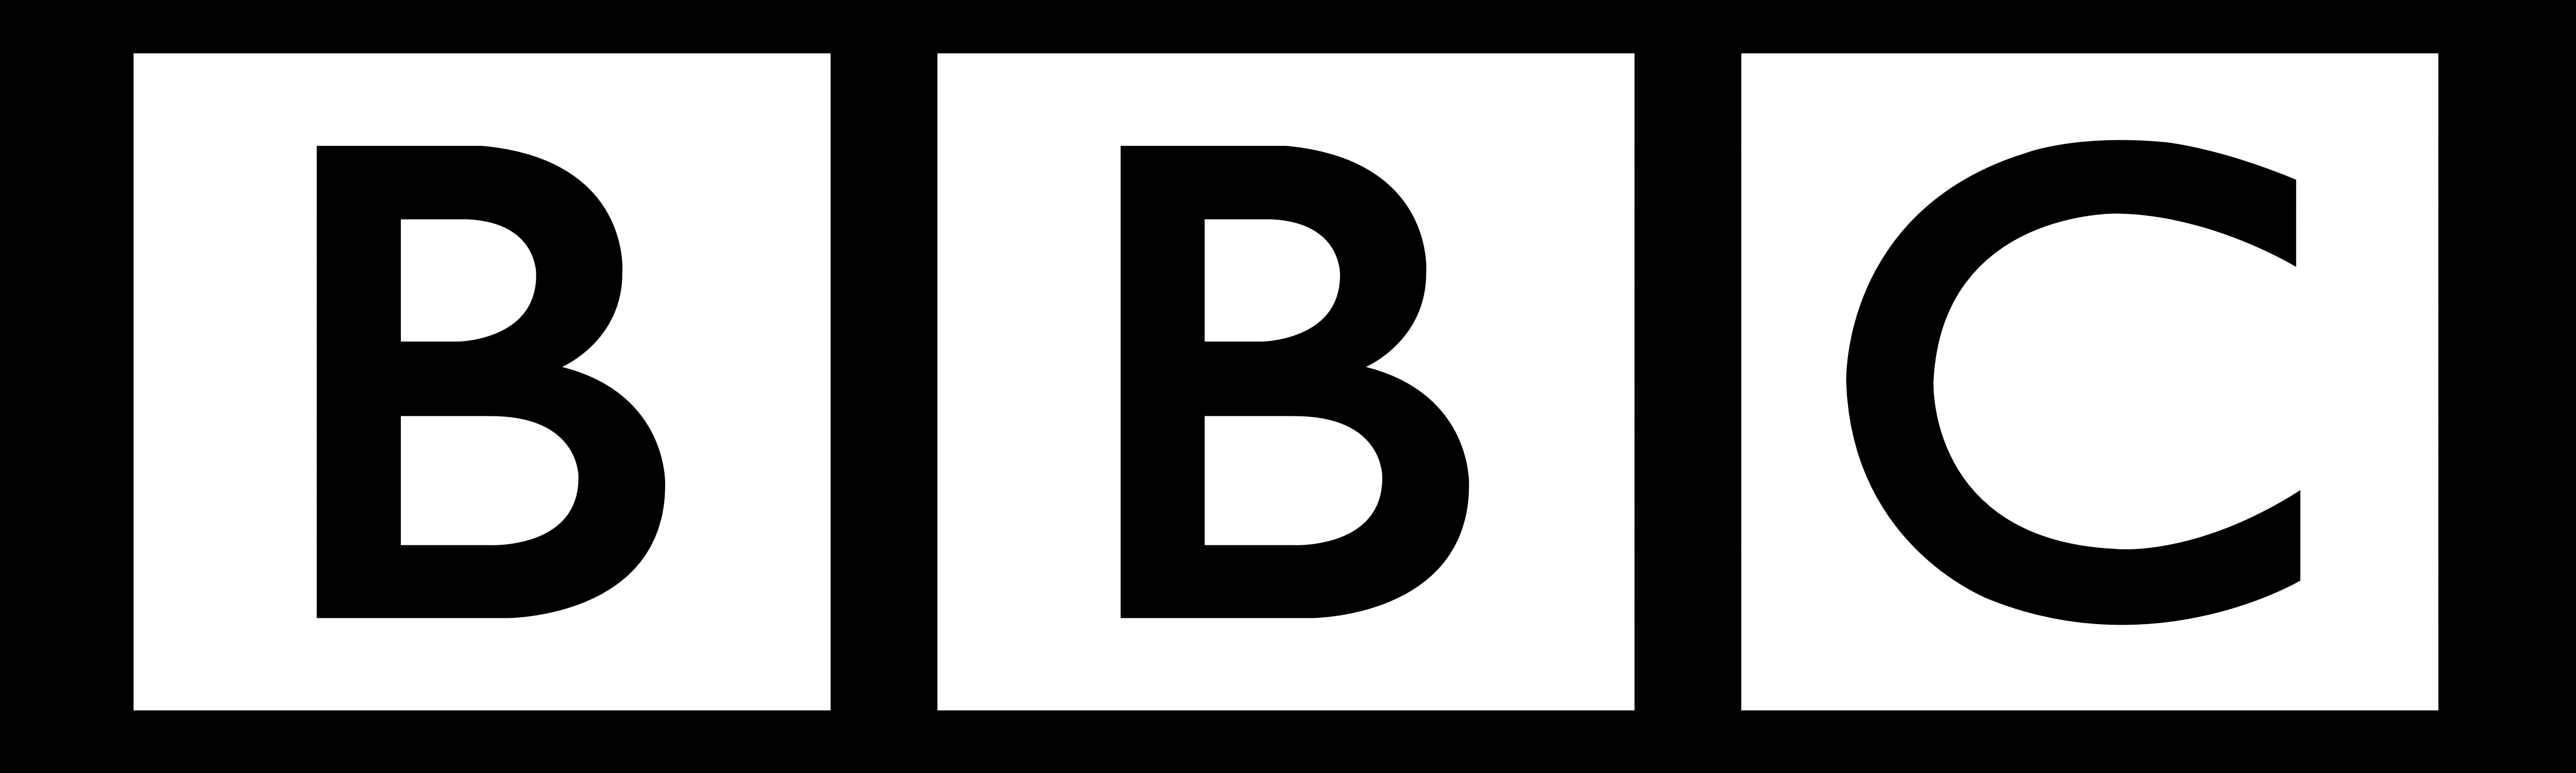 BBC_logo_black_background